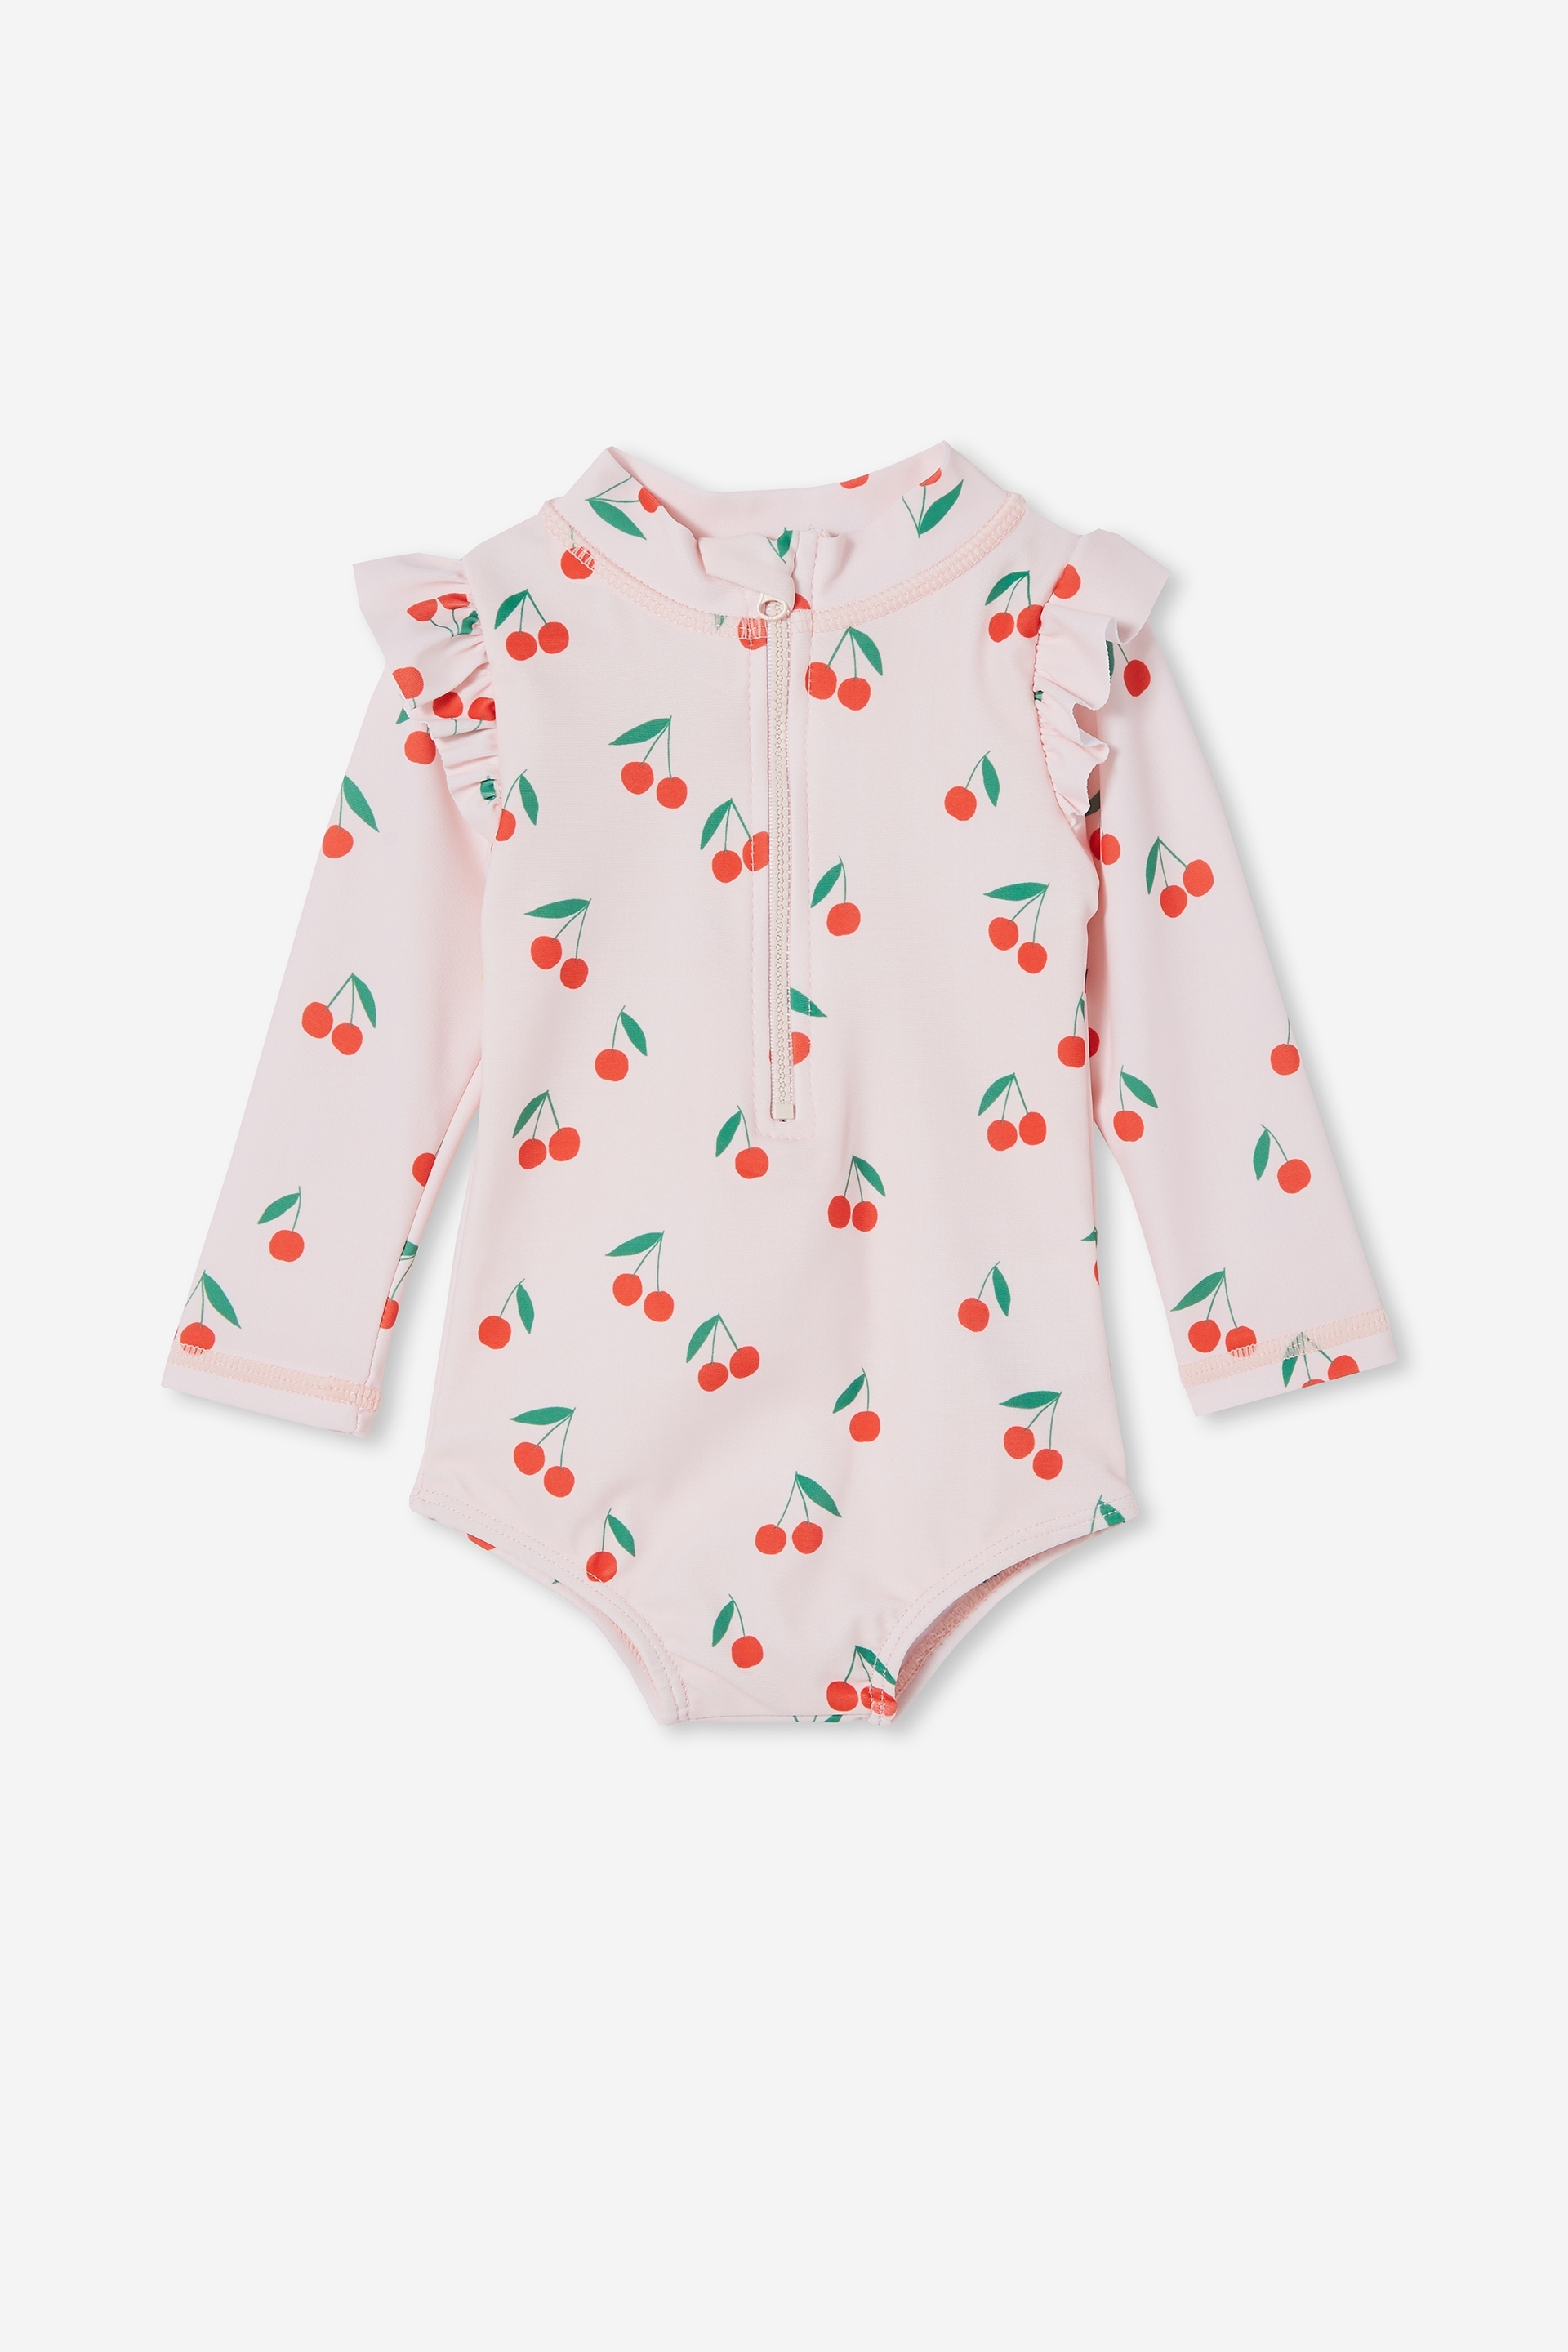 Cotton On Kids - Nicky Long Sleeve Ruffle Swimsuit - Crystal pink/red orange cheryl cherries